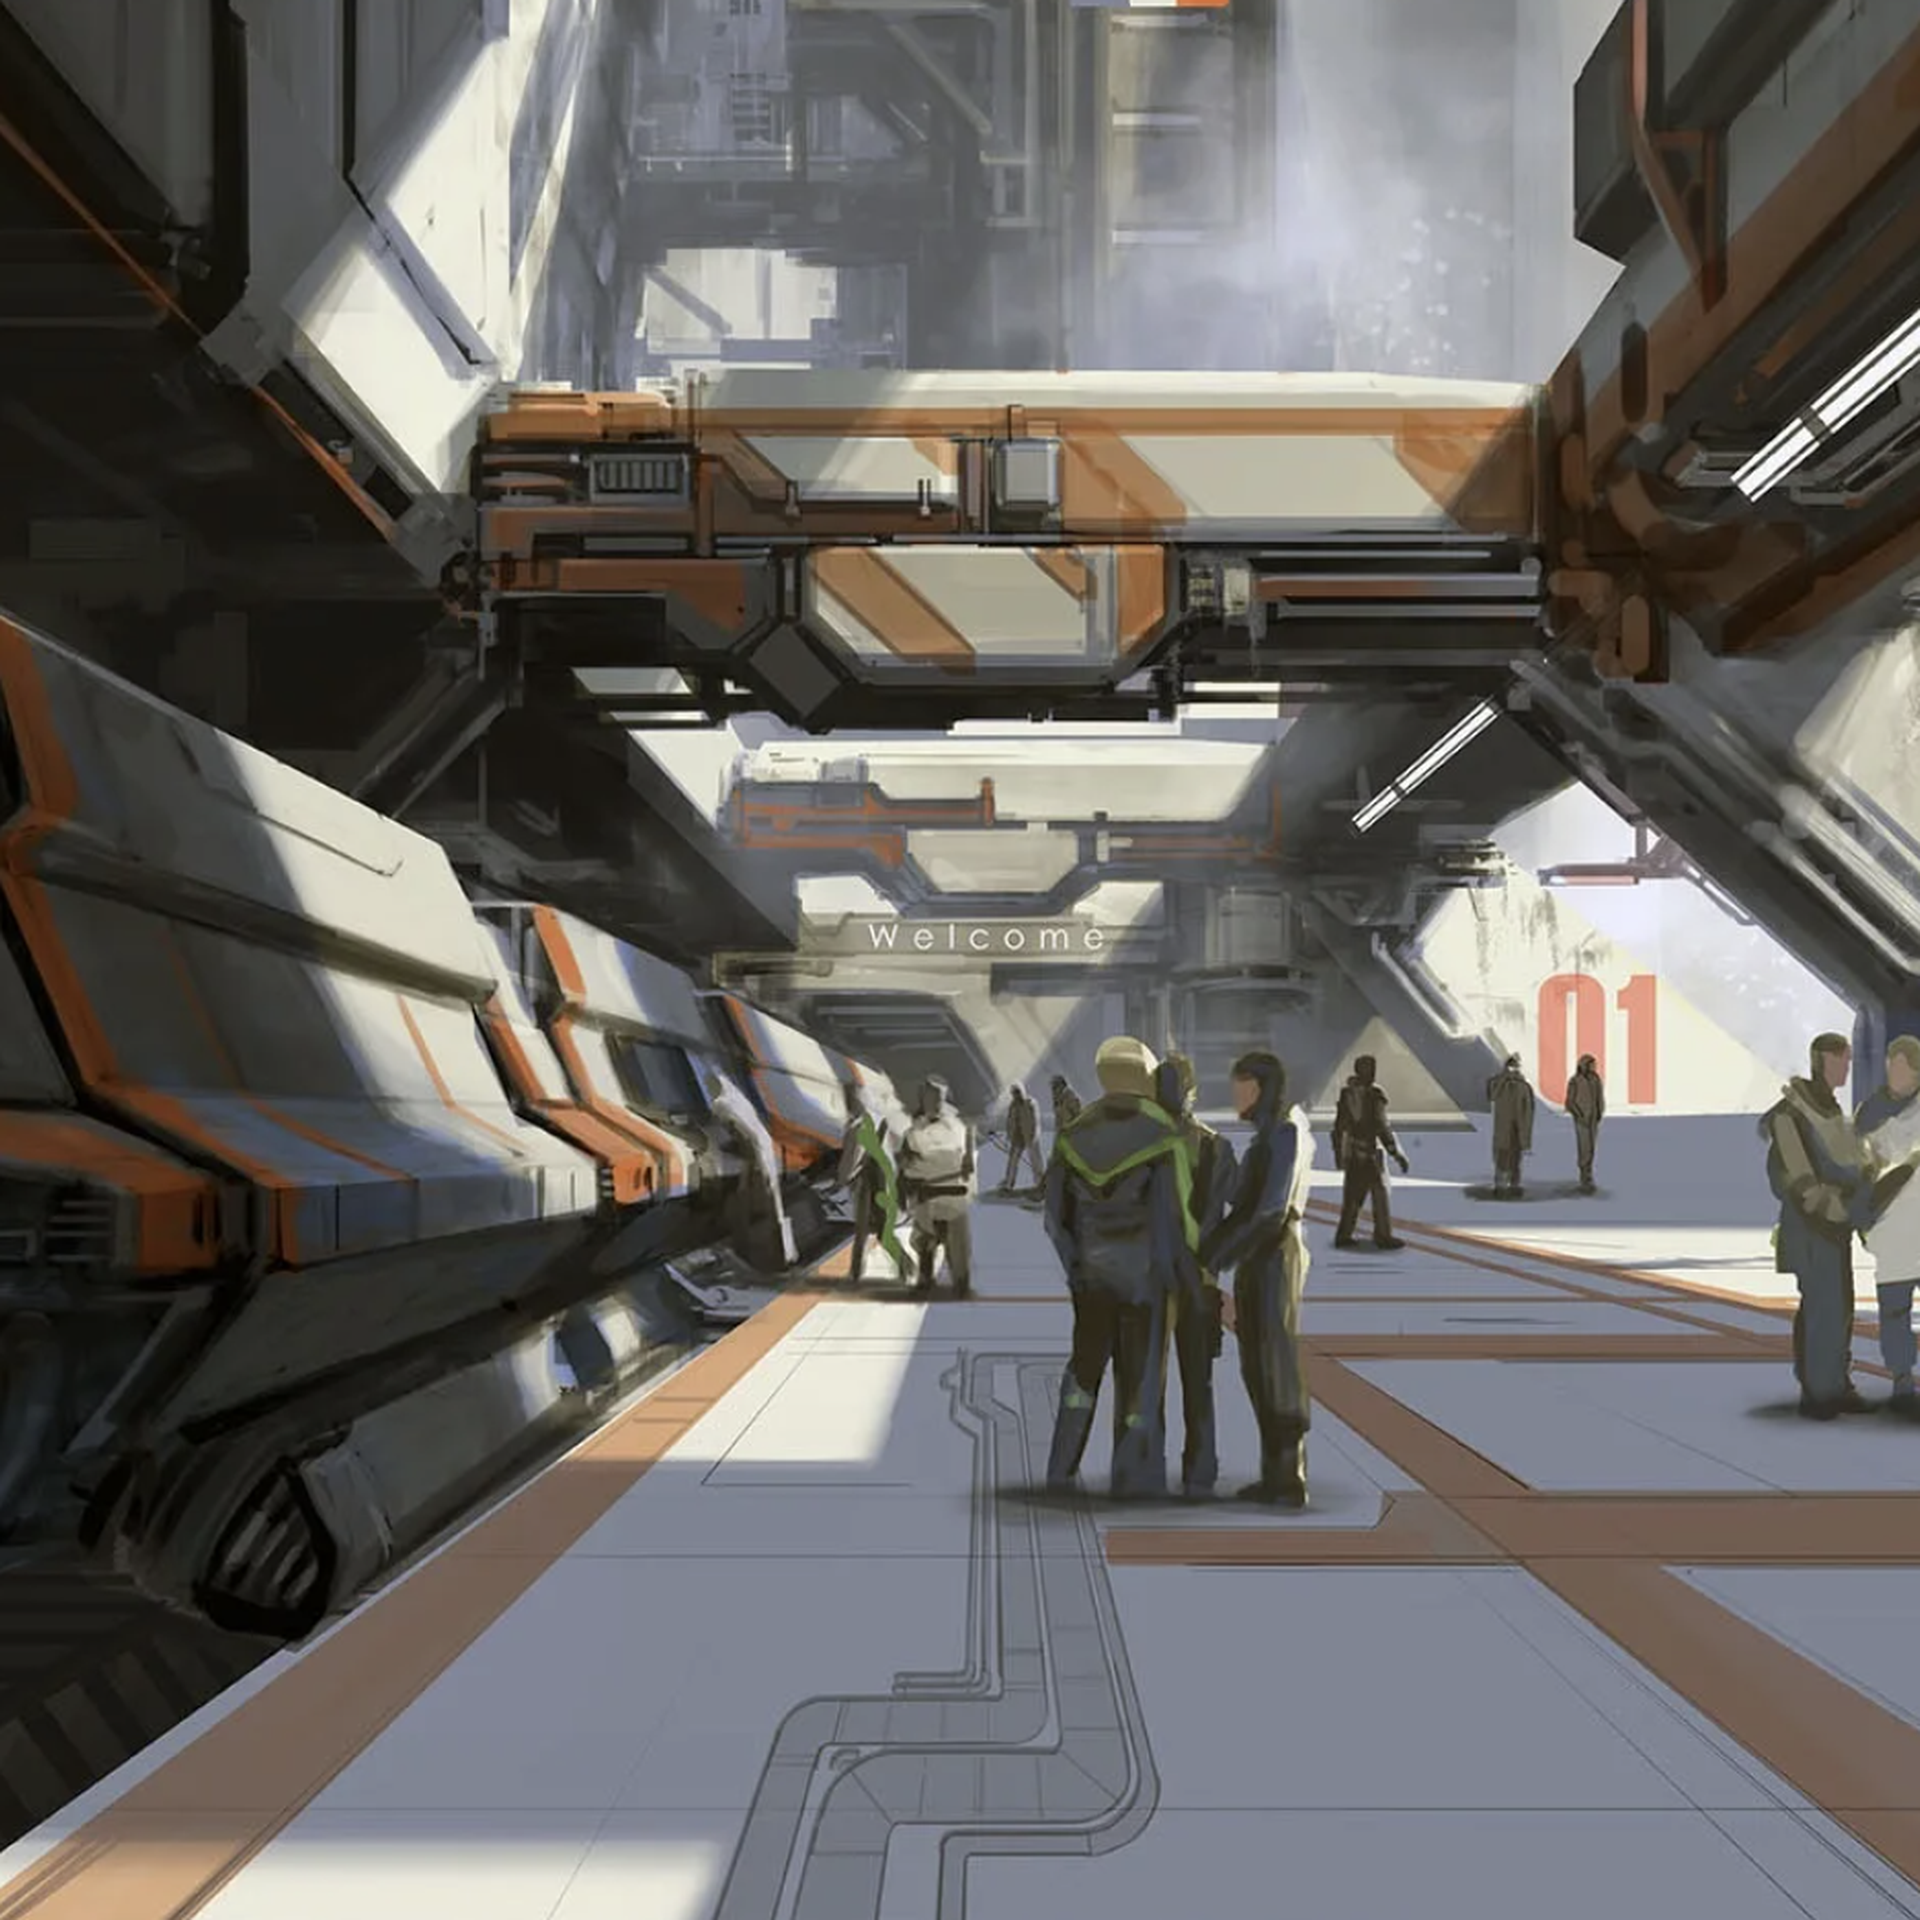 Concept art showing a futuristic train station